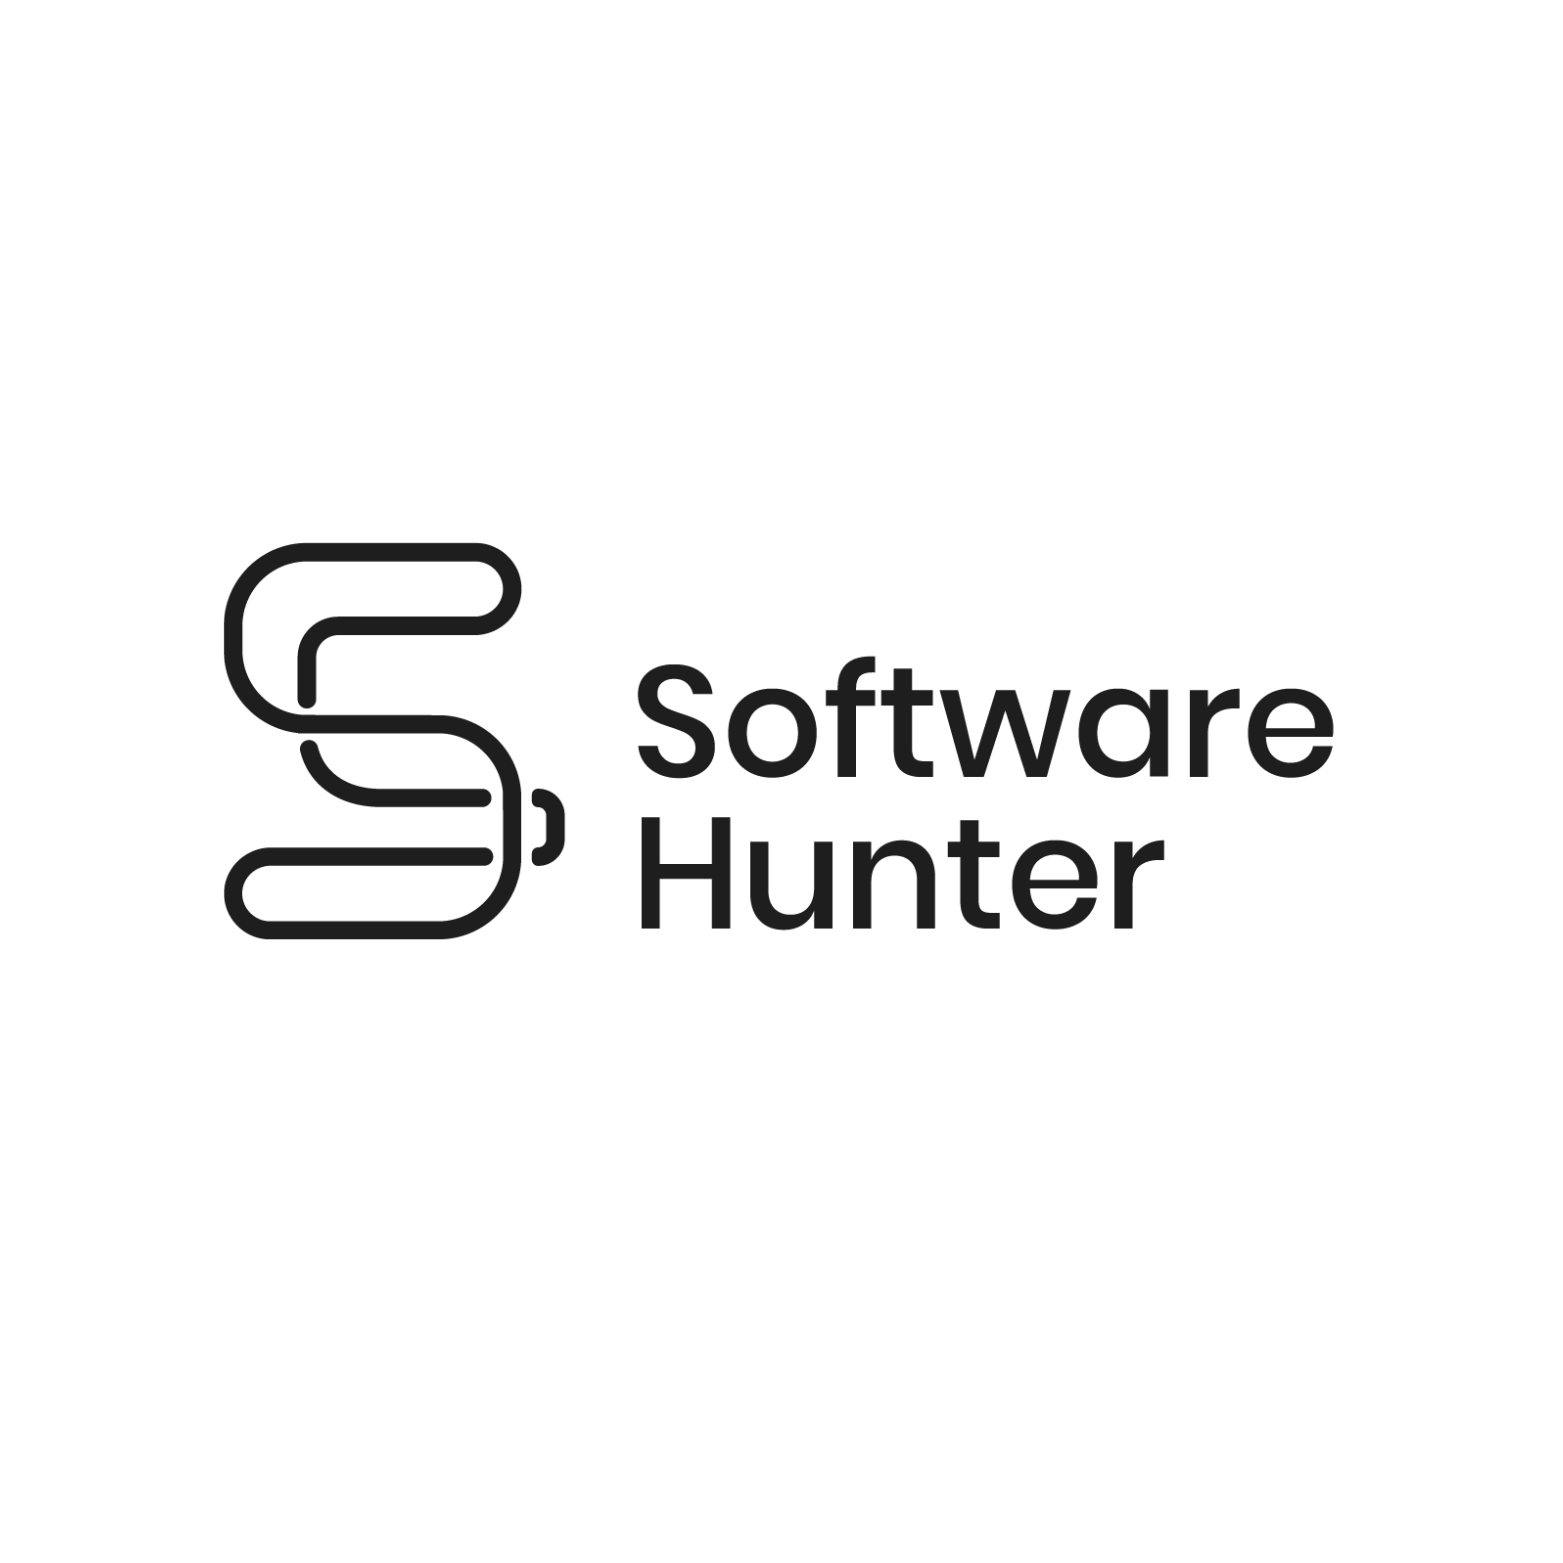 Software hunter